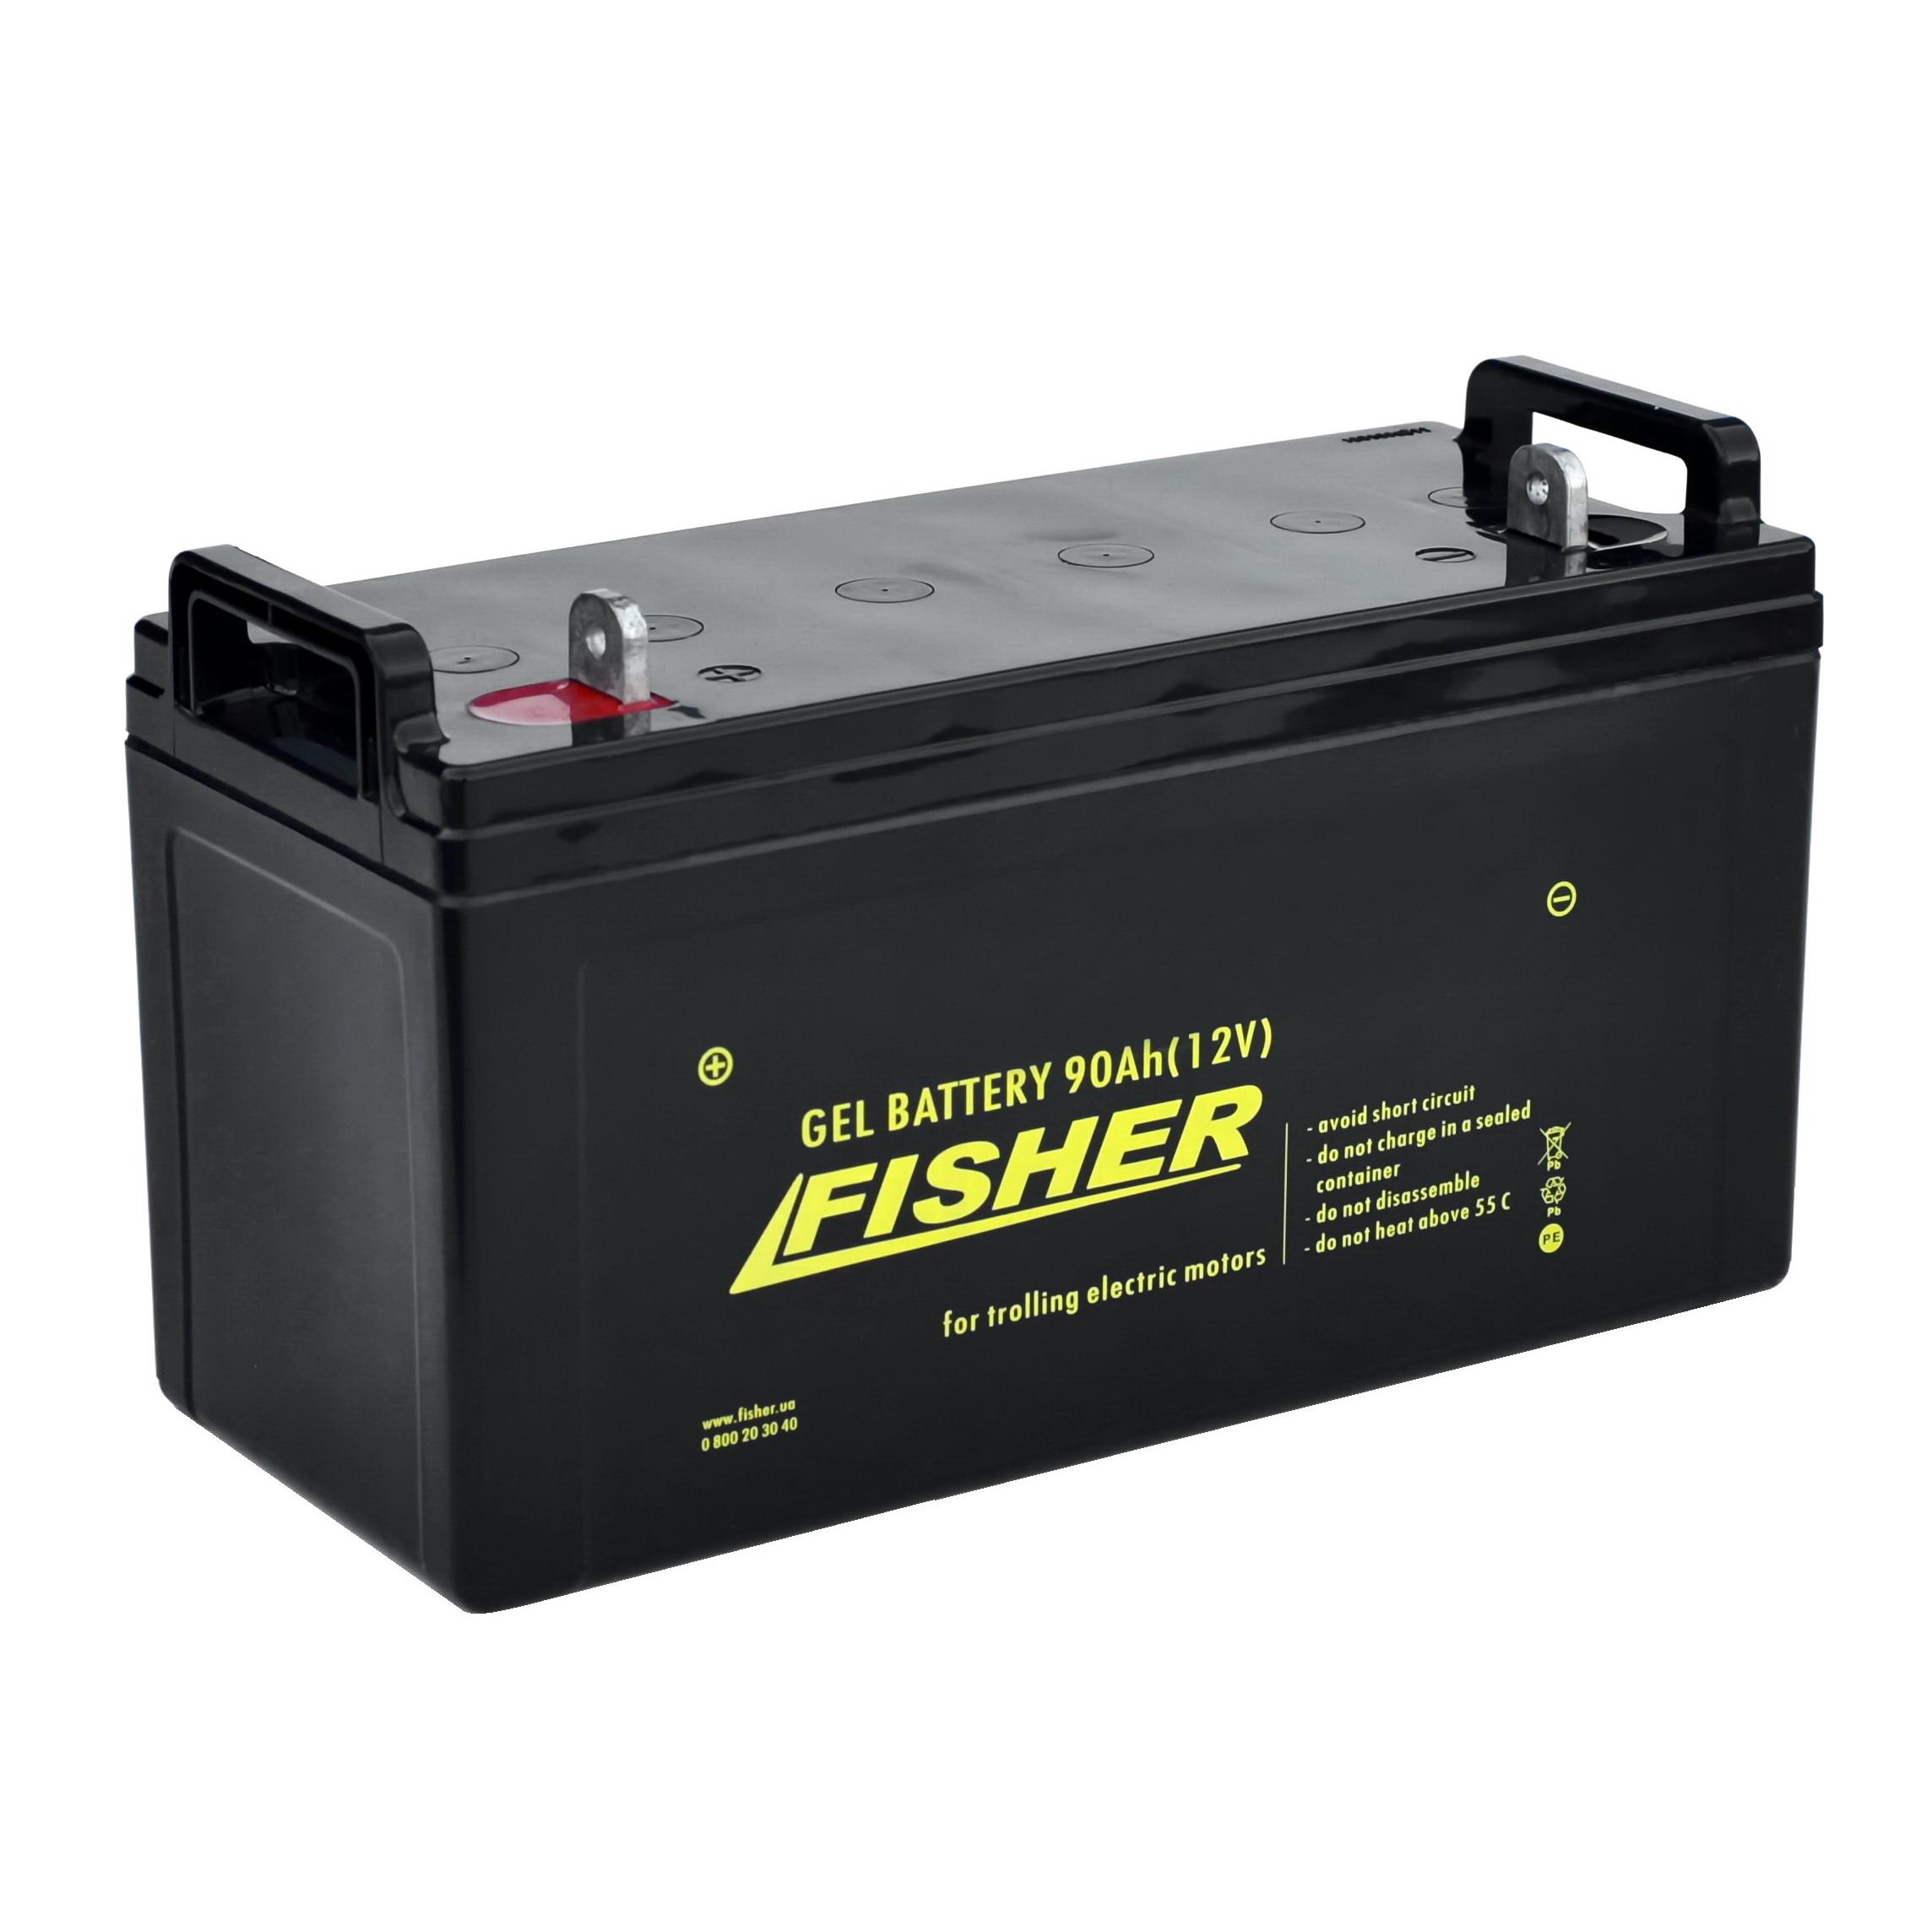 Купить Гелевый аккумулятор 90Ah Fisher 12V | Weekender UA 